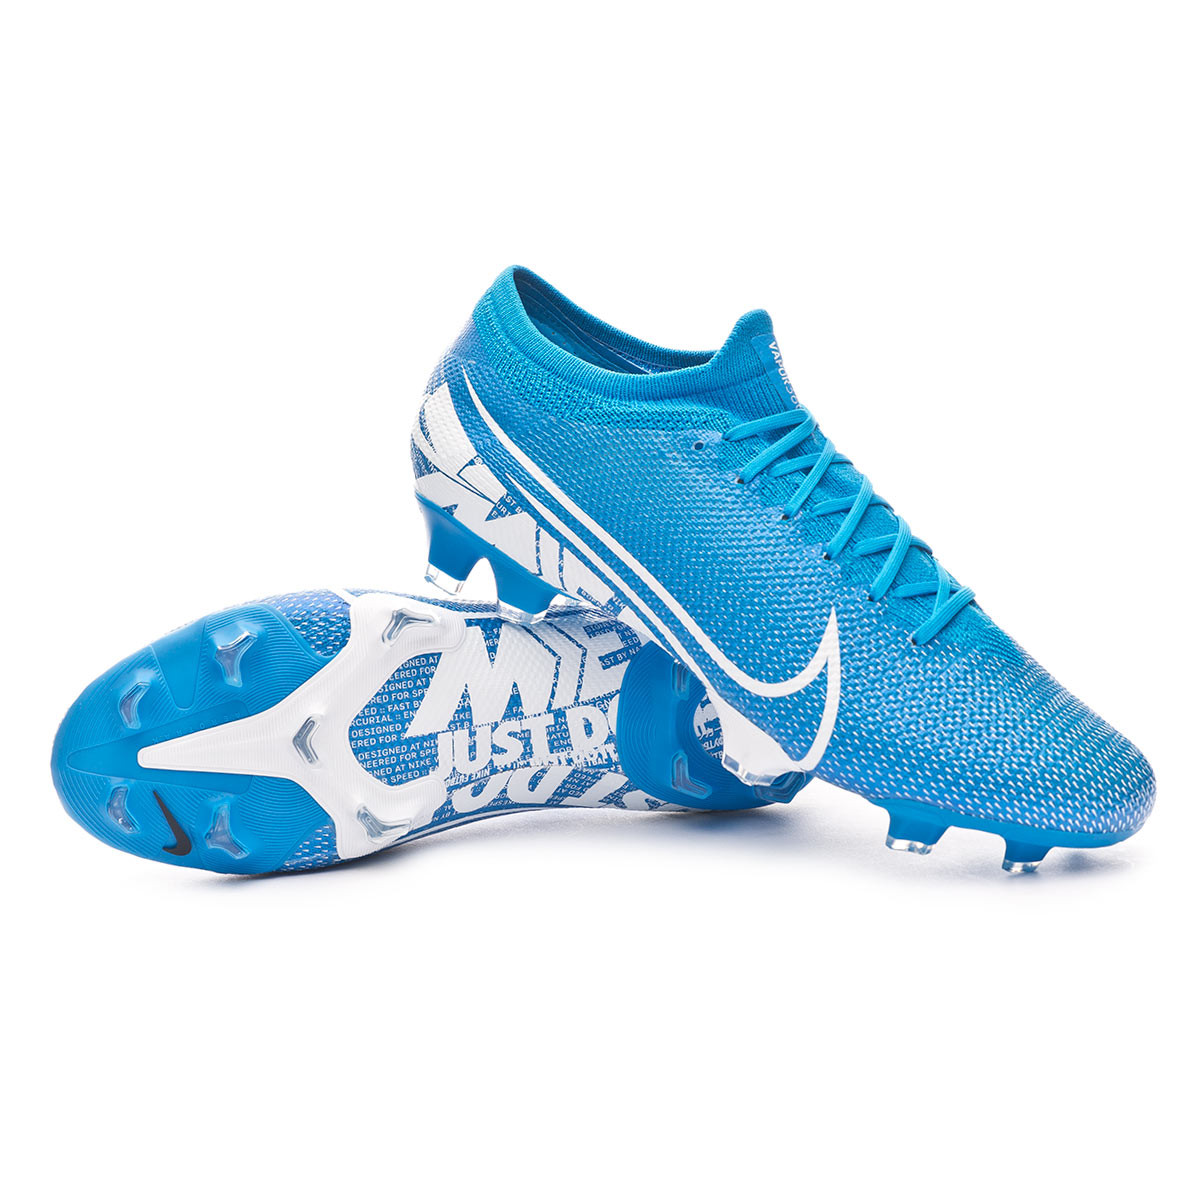 Bota de fútbol Nike Mercurial Vapor XIII Pro FG Blue hero-White-Obsidian -  Tienda de fútbol Fútbol Emotion